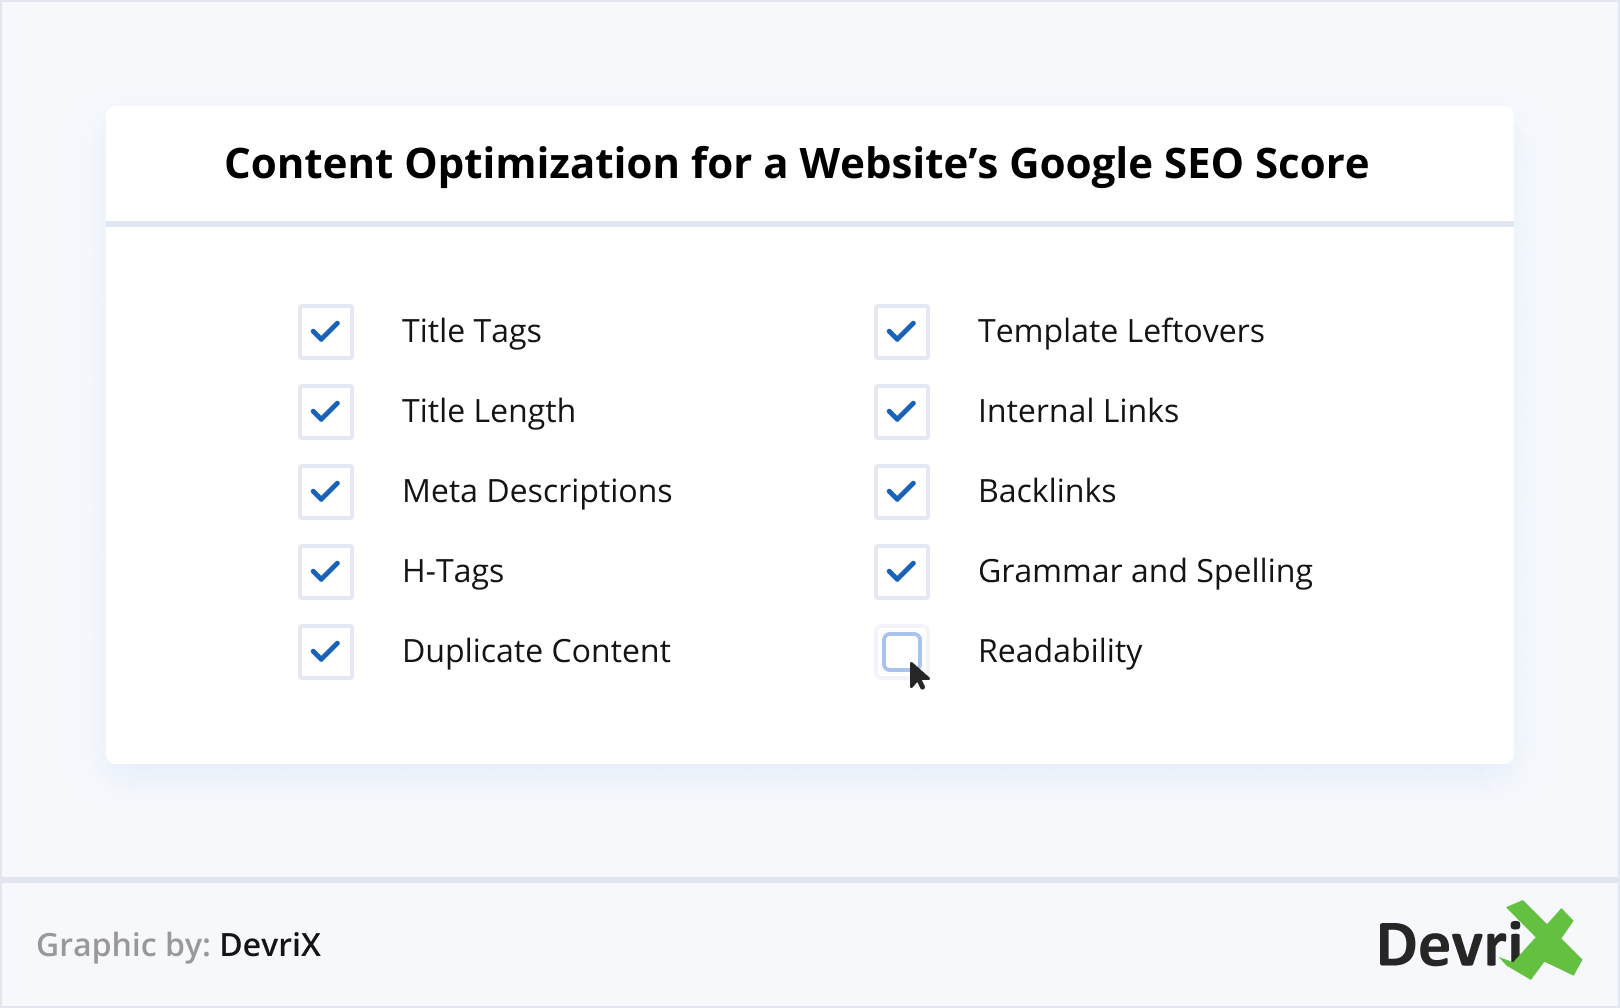 Content Optimization for a Website’s Google SEO Score